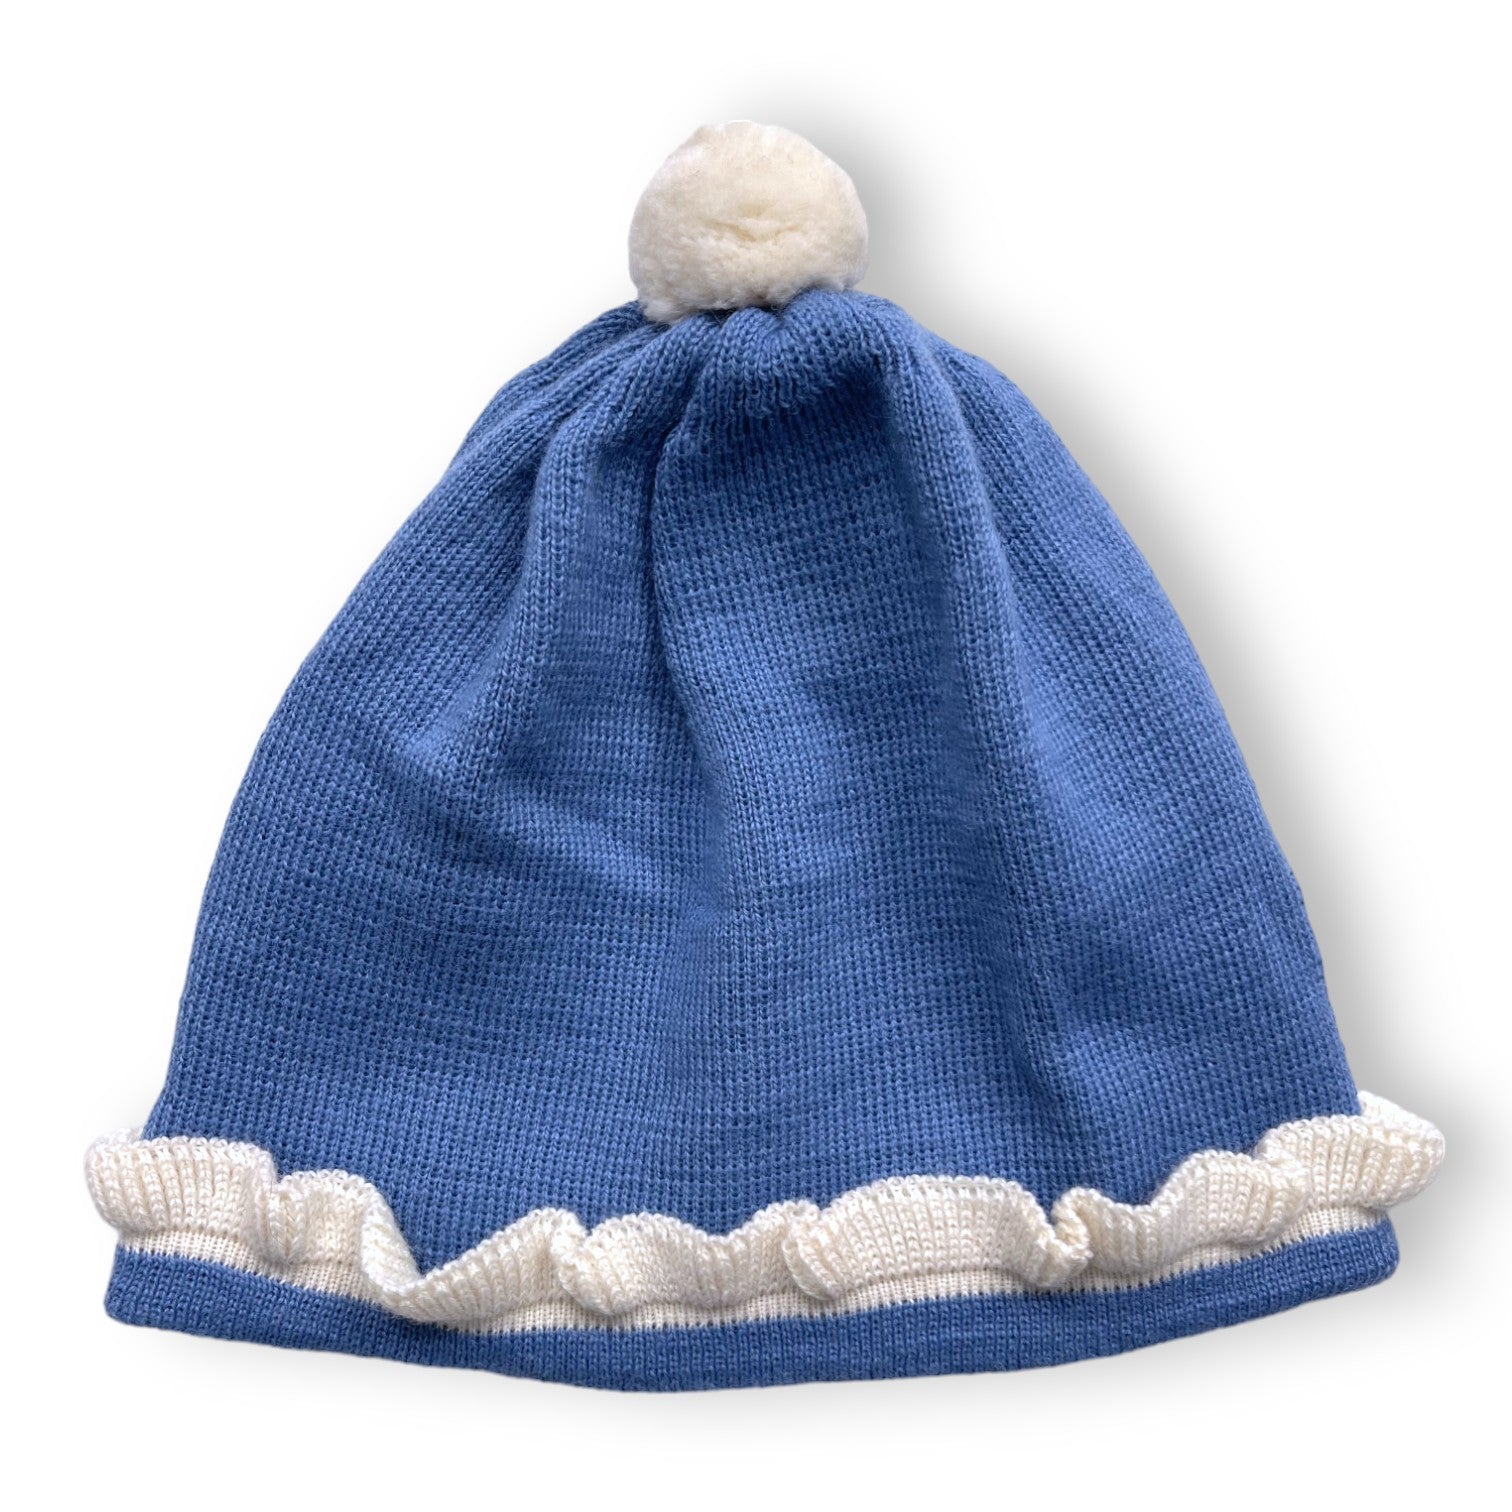 CACHAREL - Bonnet bleu pompom blanc - 12/18 mois